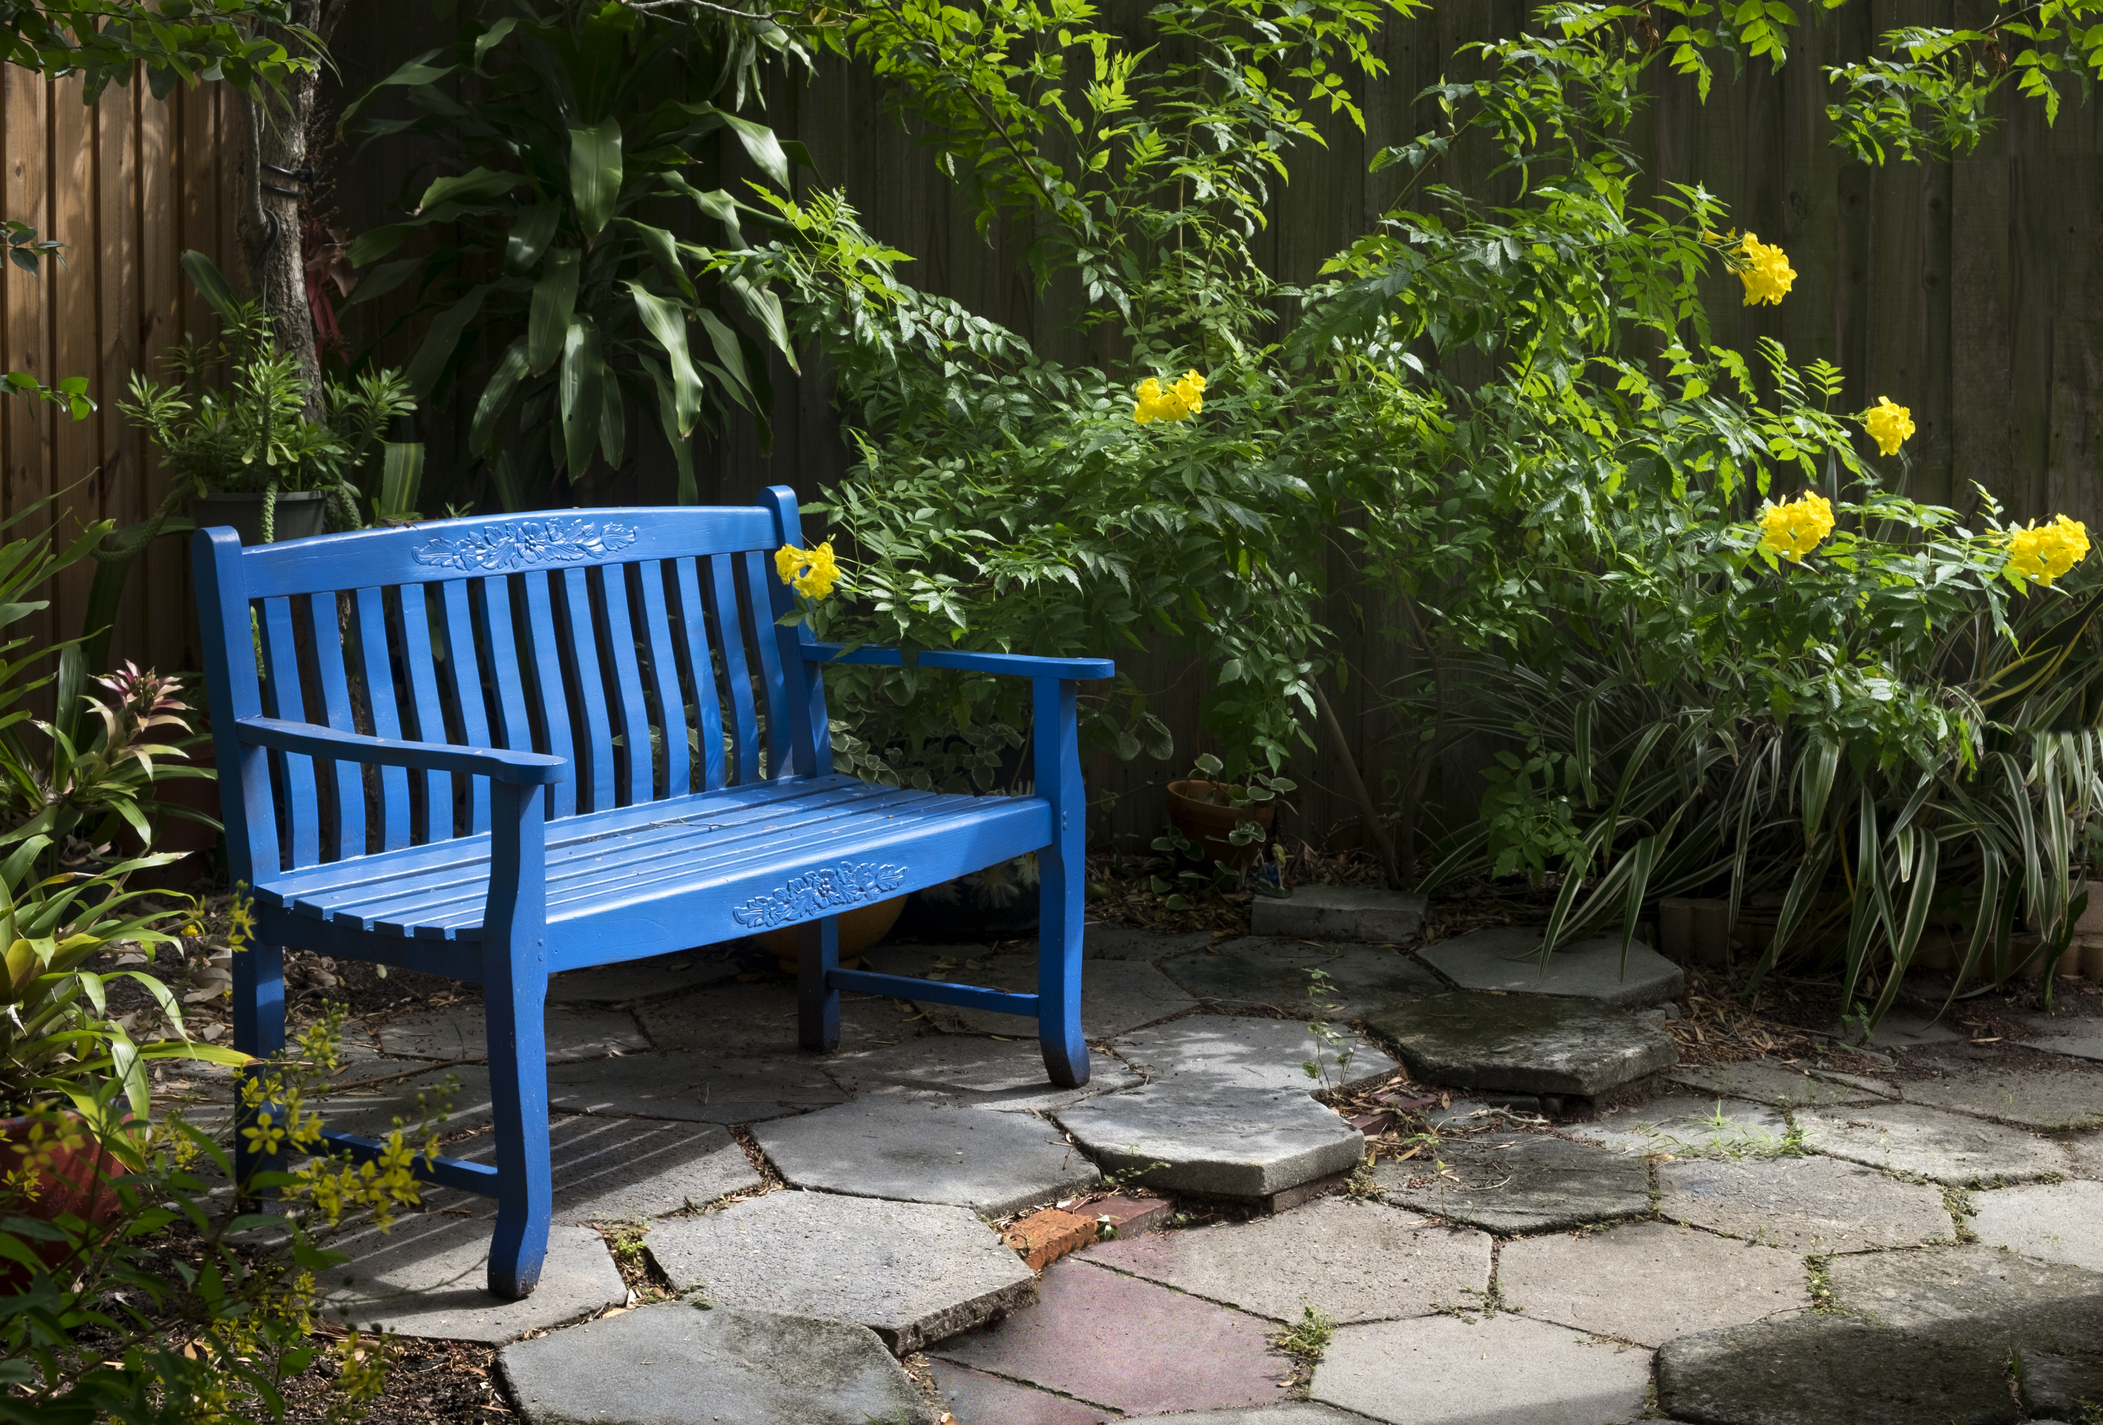 A blue bench in a backyard garden.